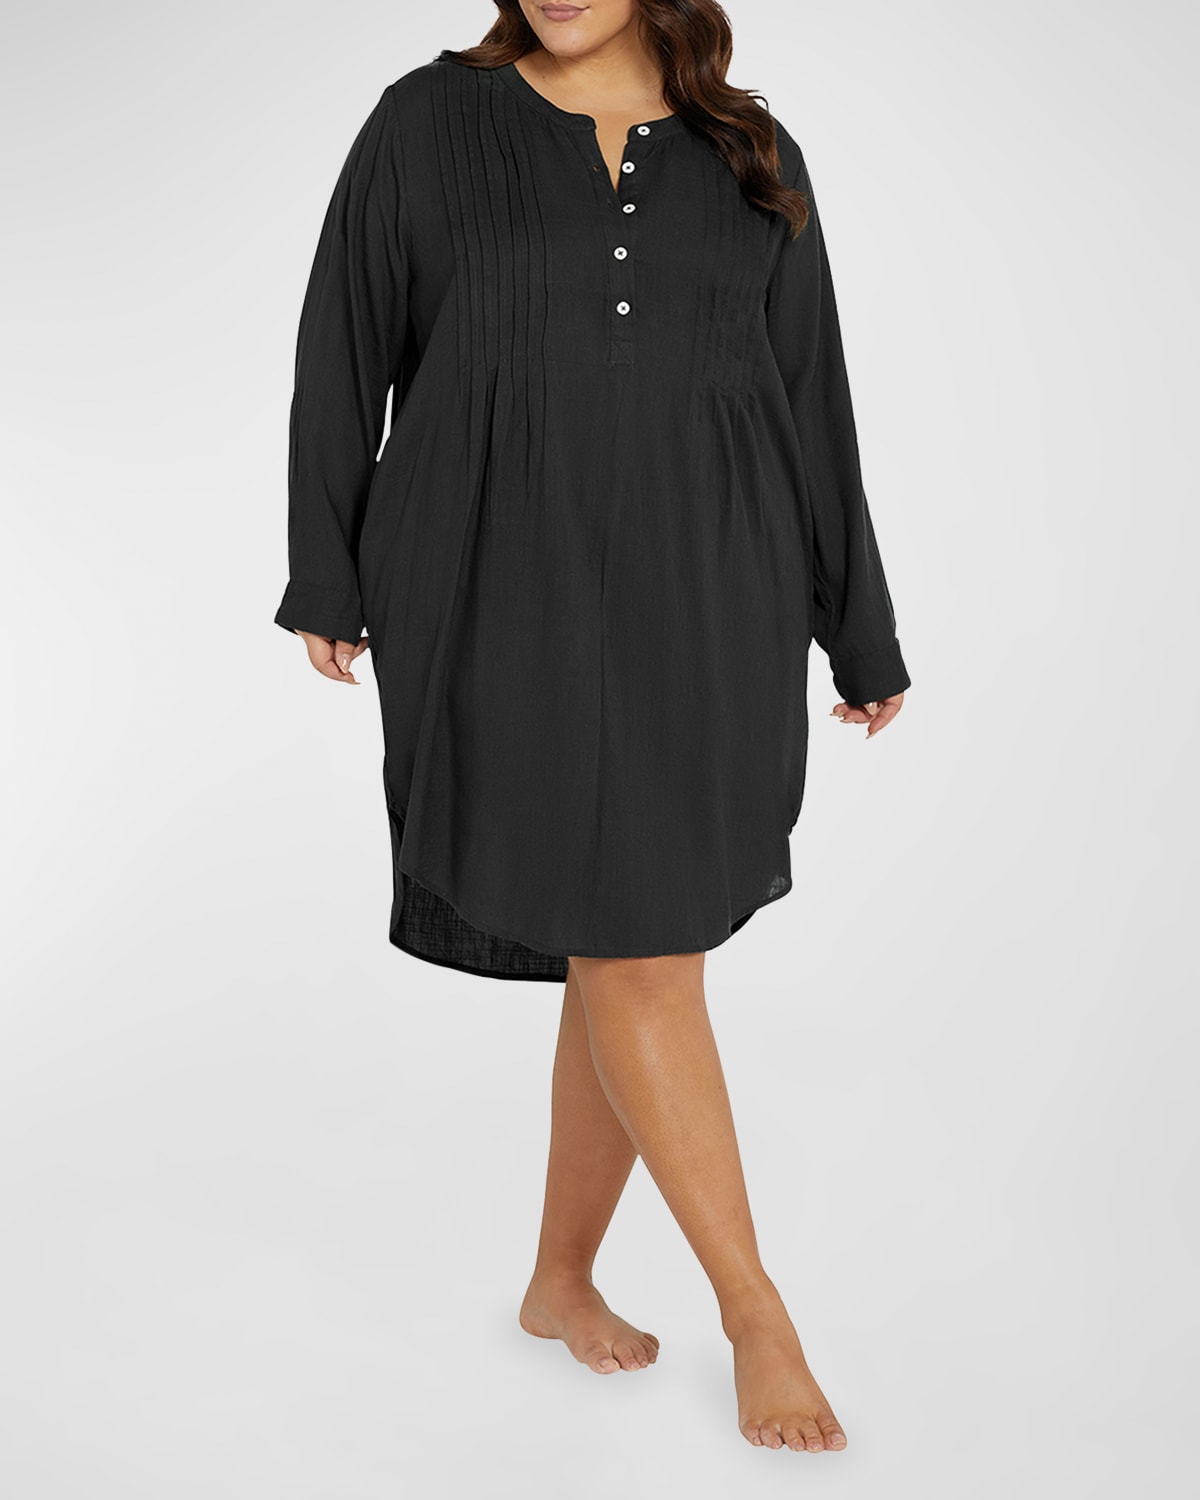 Artesands Plus Size Gershwin Beach Shirt Coverup In Black